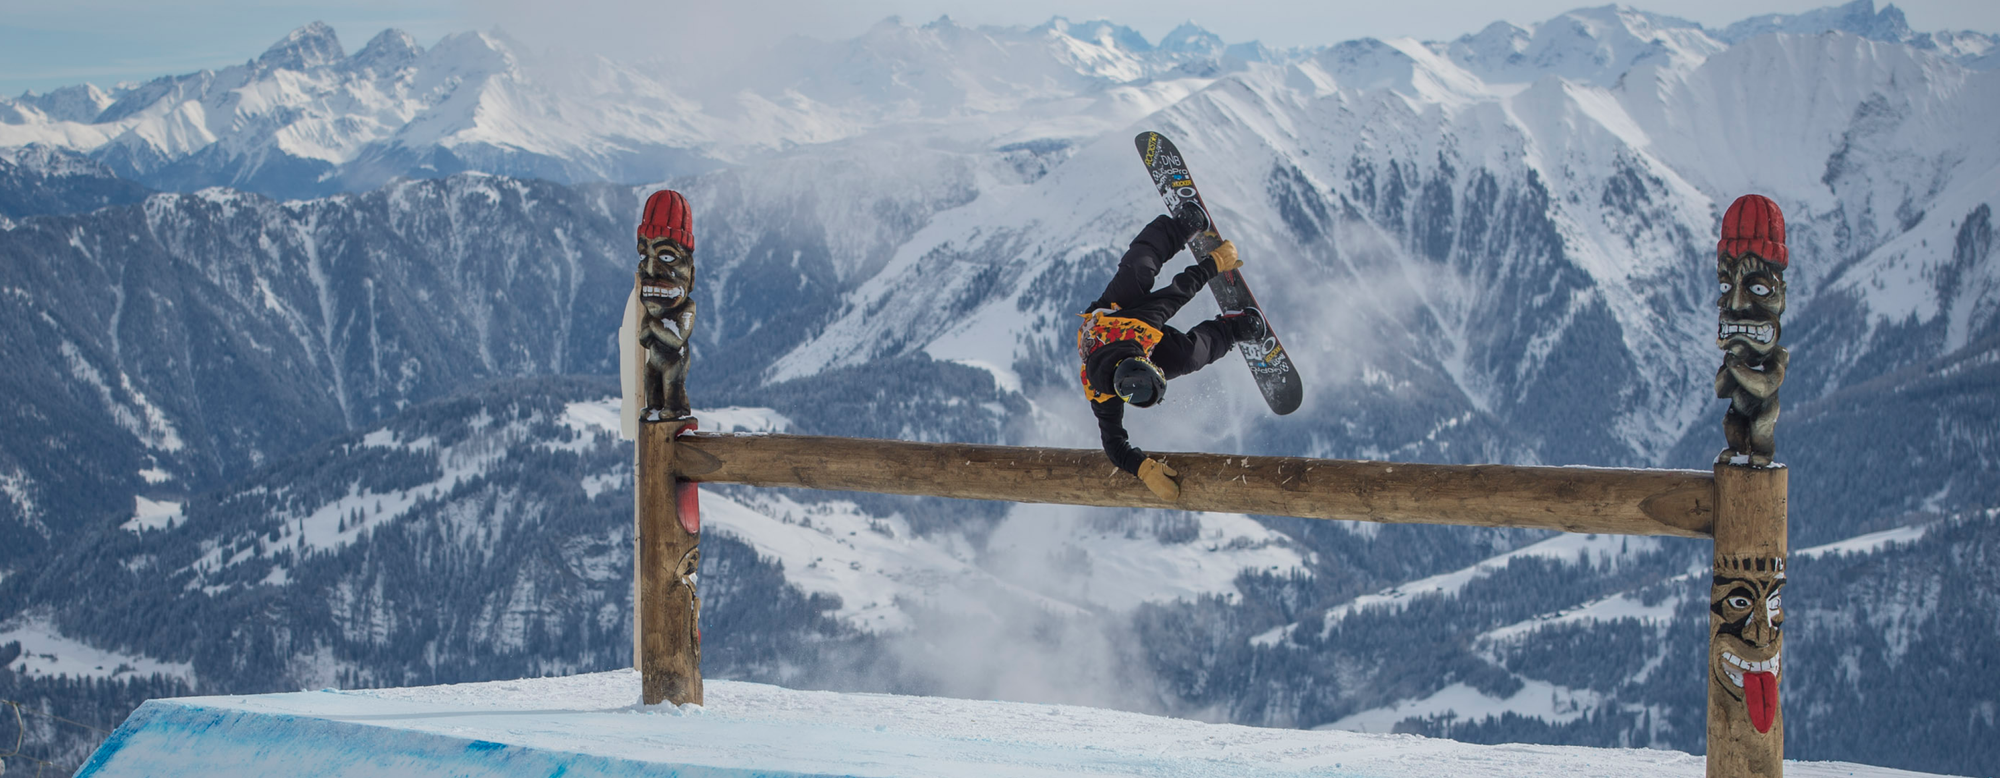 Burton Laax Open Freestyle Snowboarder